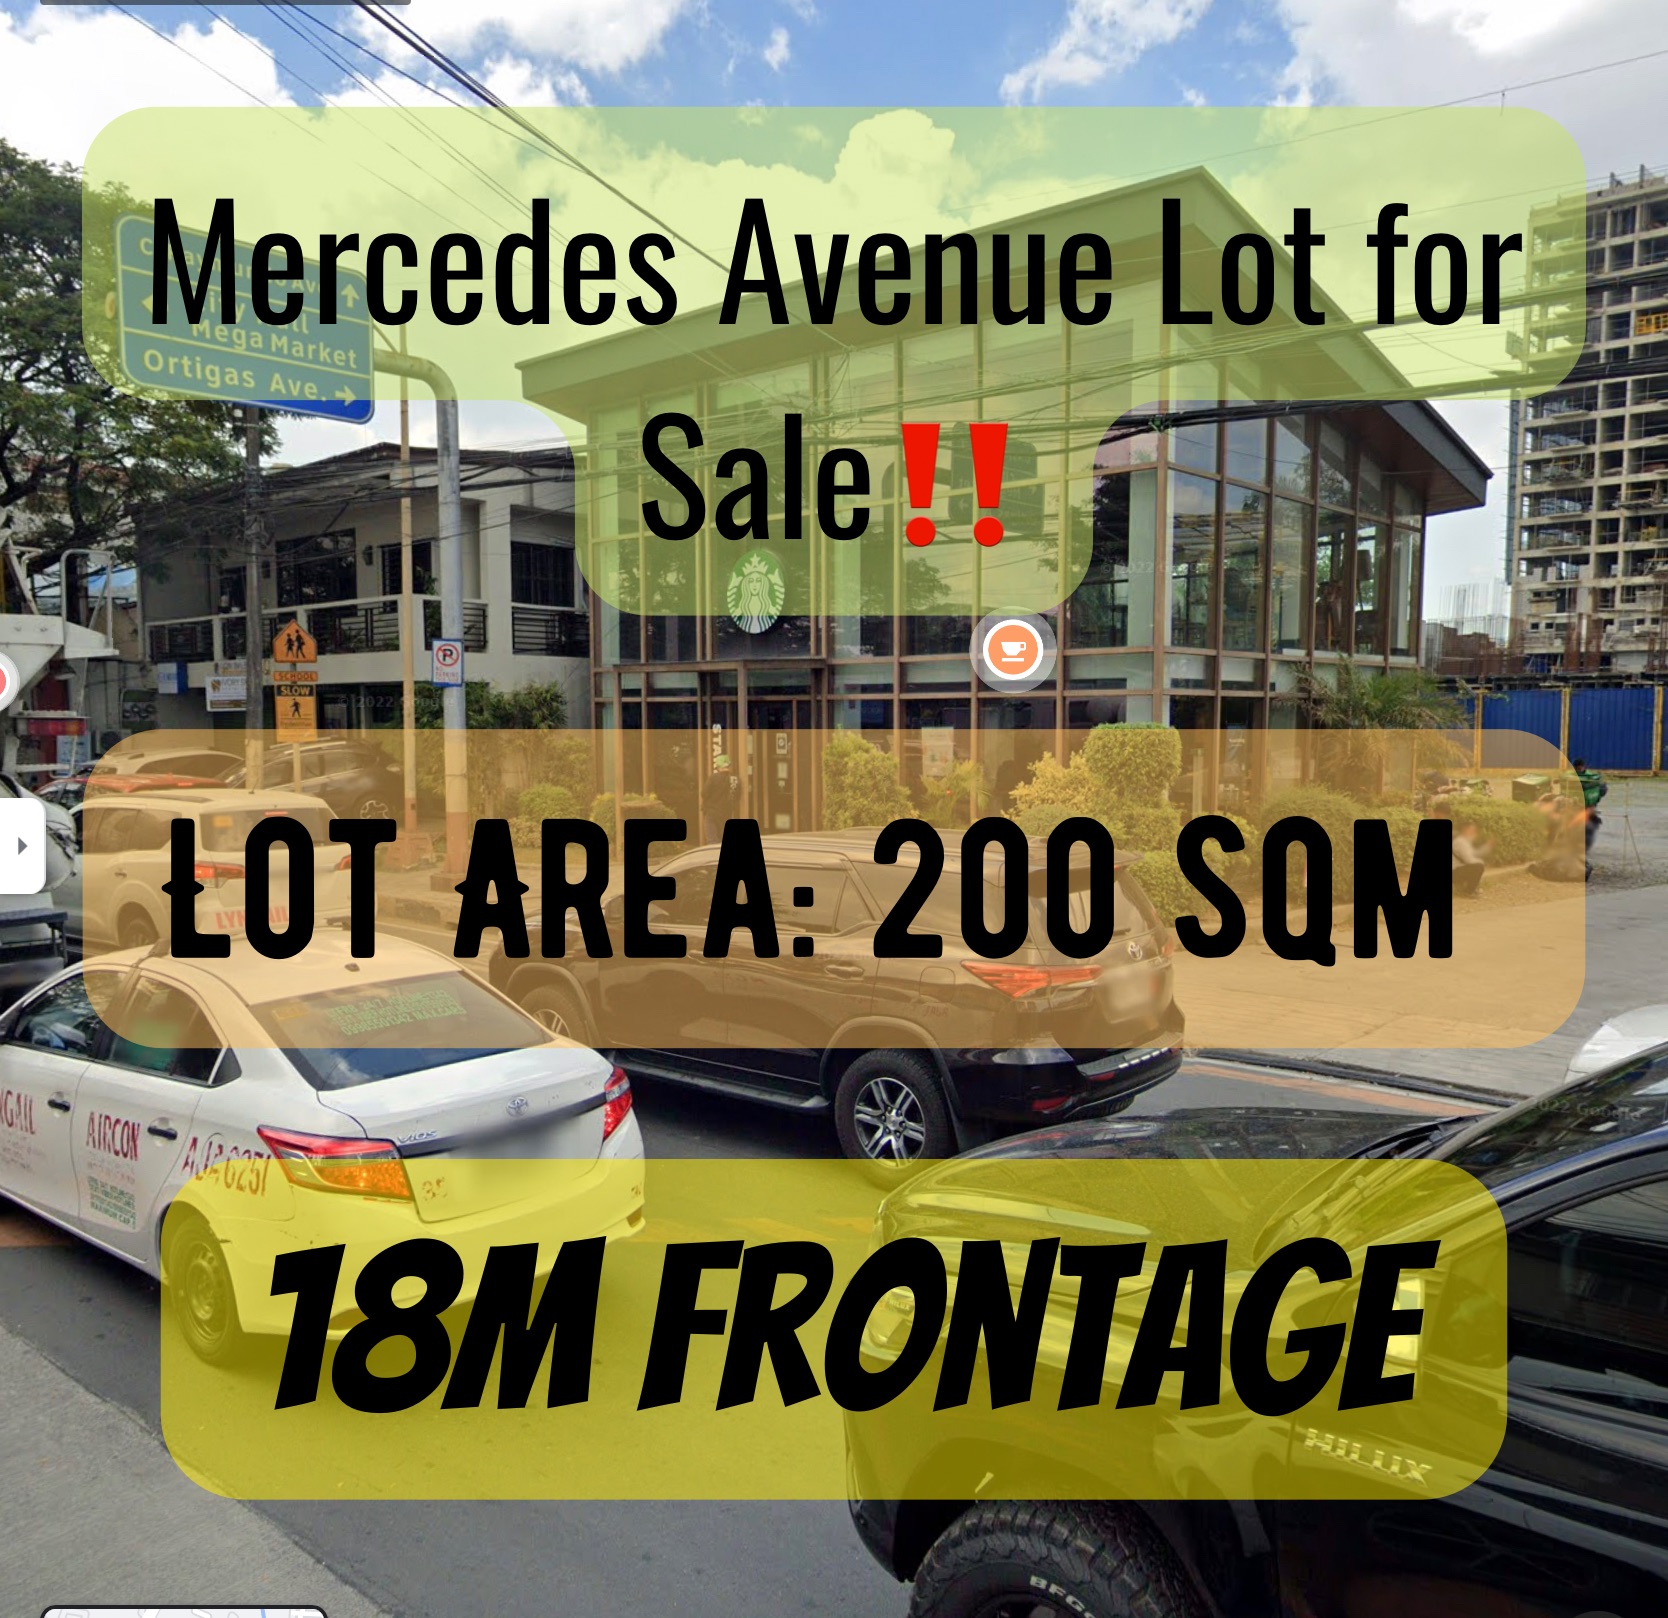 Mercedes Avenue Lot for Sale‼️